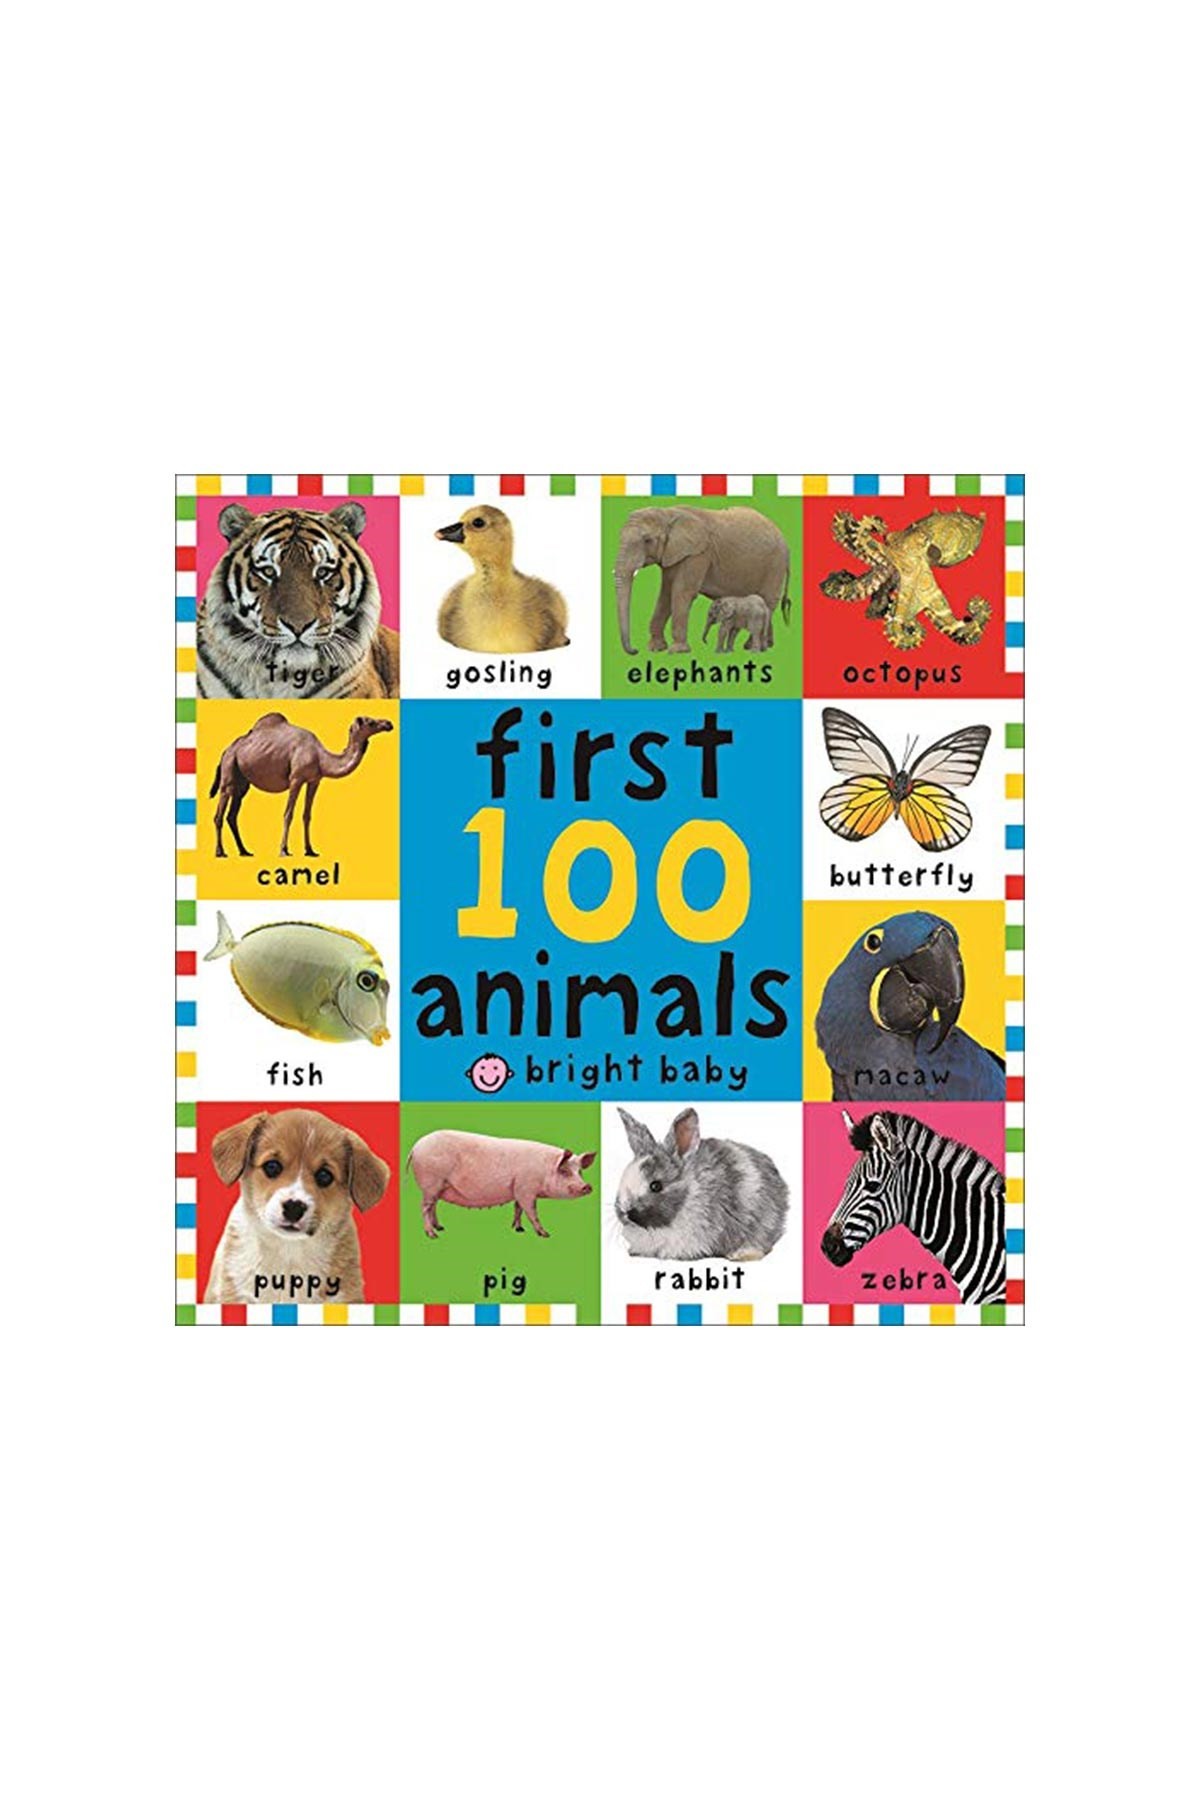 Priddy Books First 100 Animals